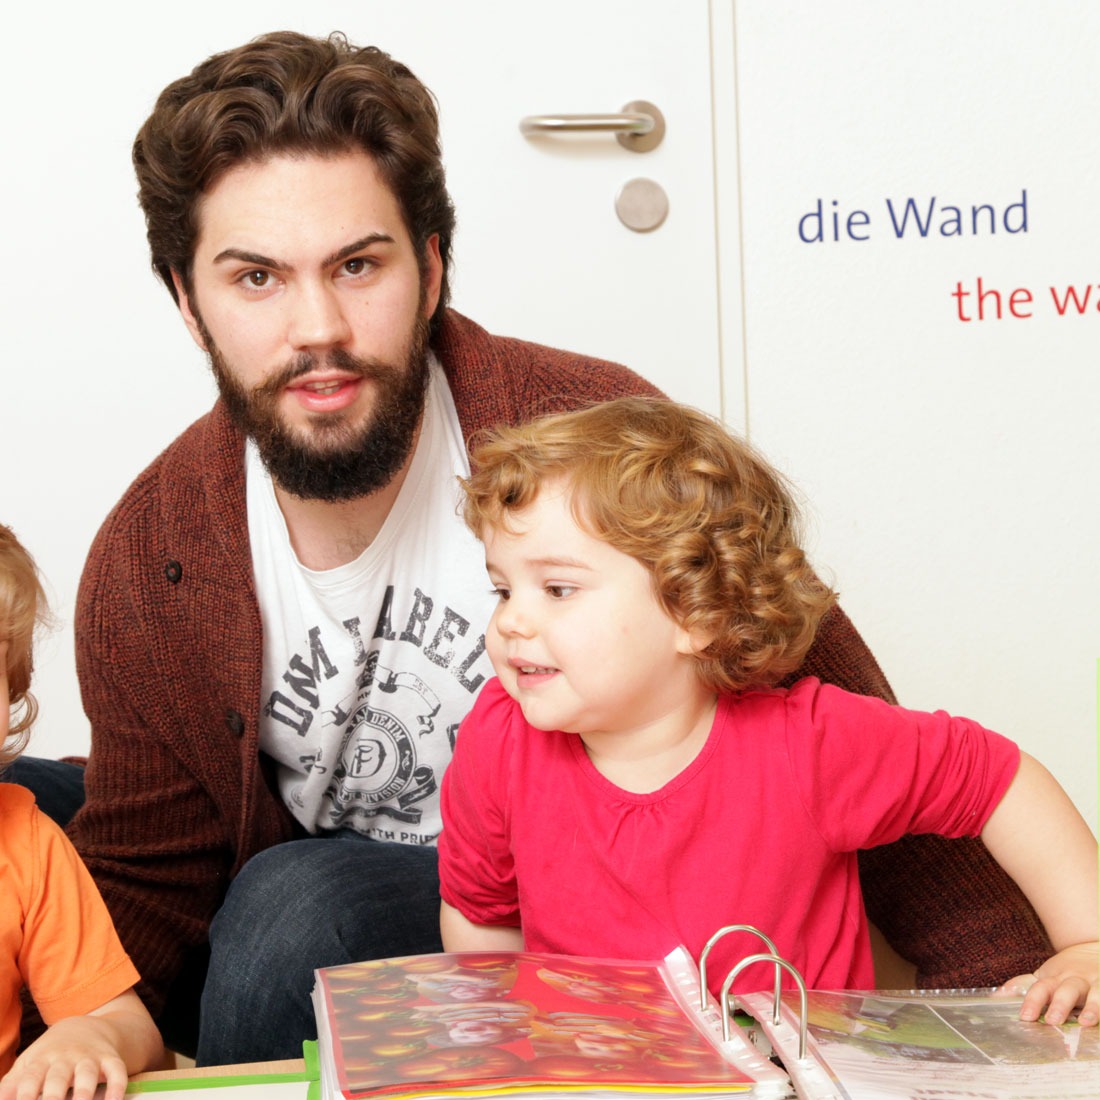 Kundenfoto 6 Kids & Co. Unterlindau - pme Familienservice